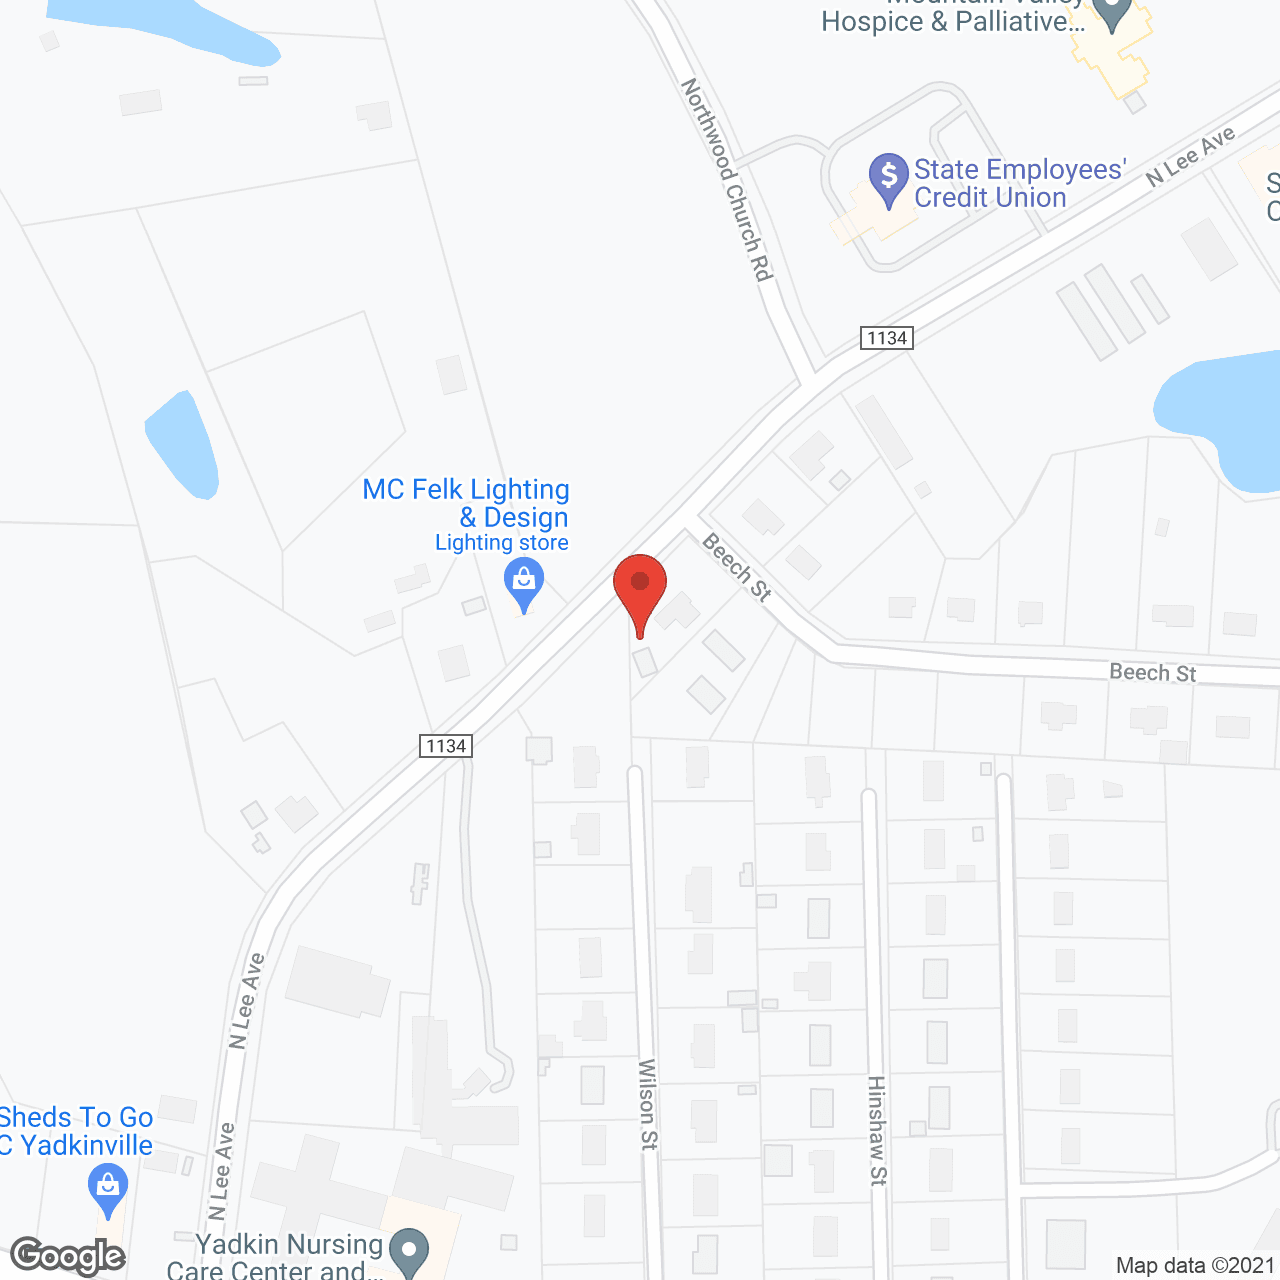 Yadkin Nursing Care Center and Magnolias Over Yadkin in google map